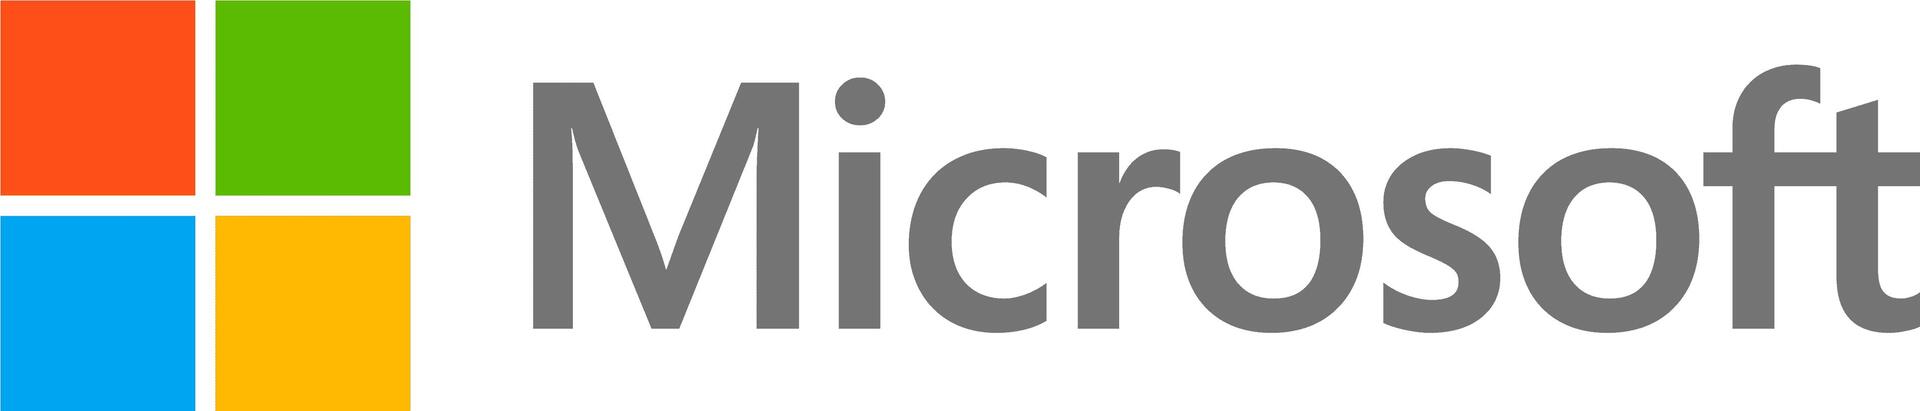 Microsoft DG7GMGF0D65N.0003 Software-Lizenz/-Upgrade 1 Lizenz(en) (DG7GMGF0D65N.0003)